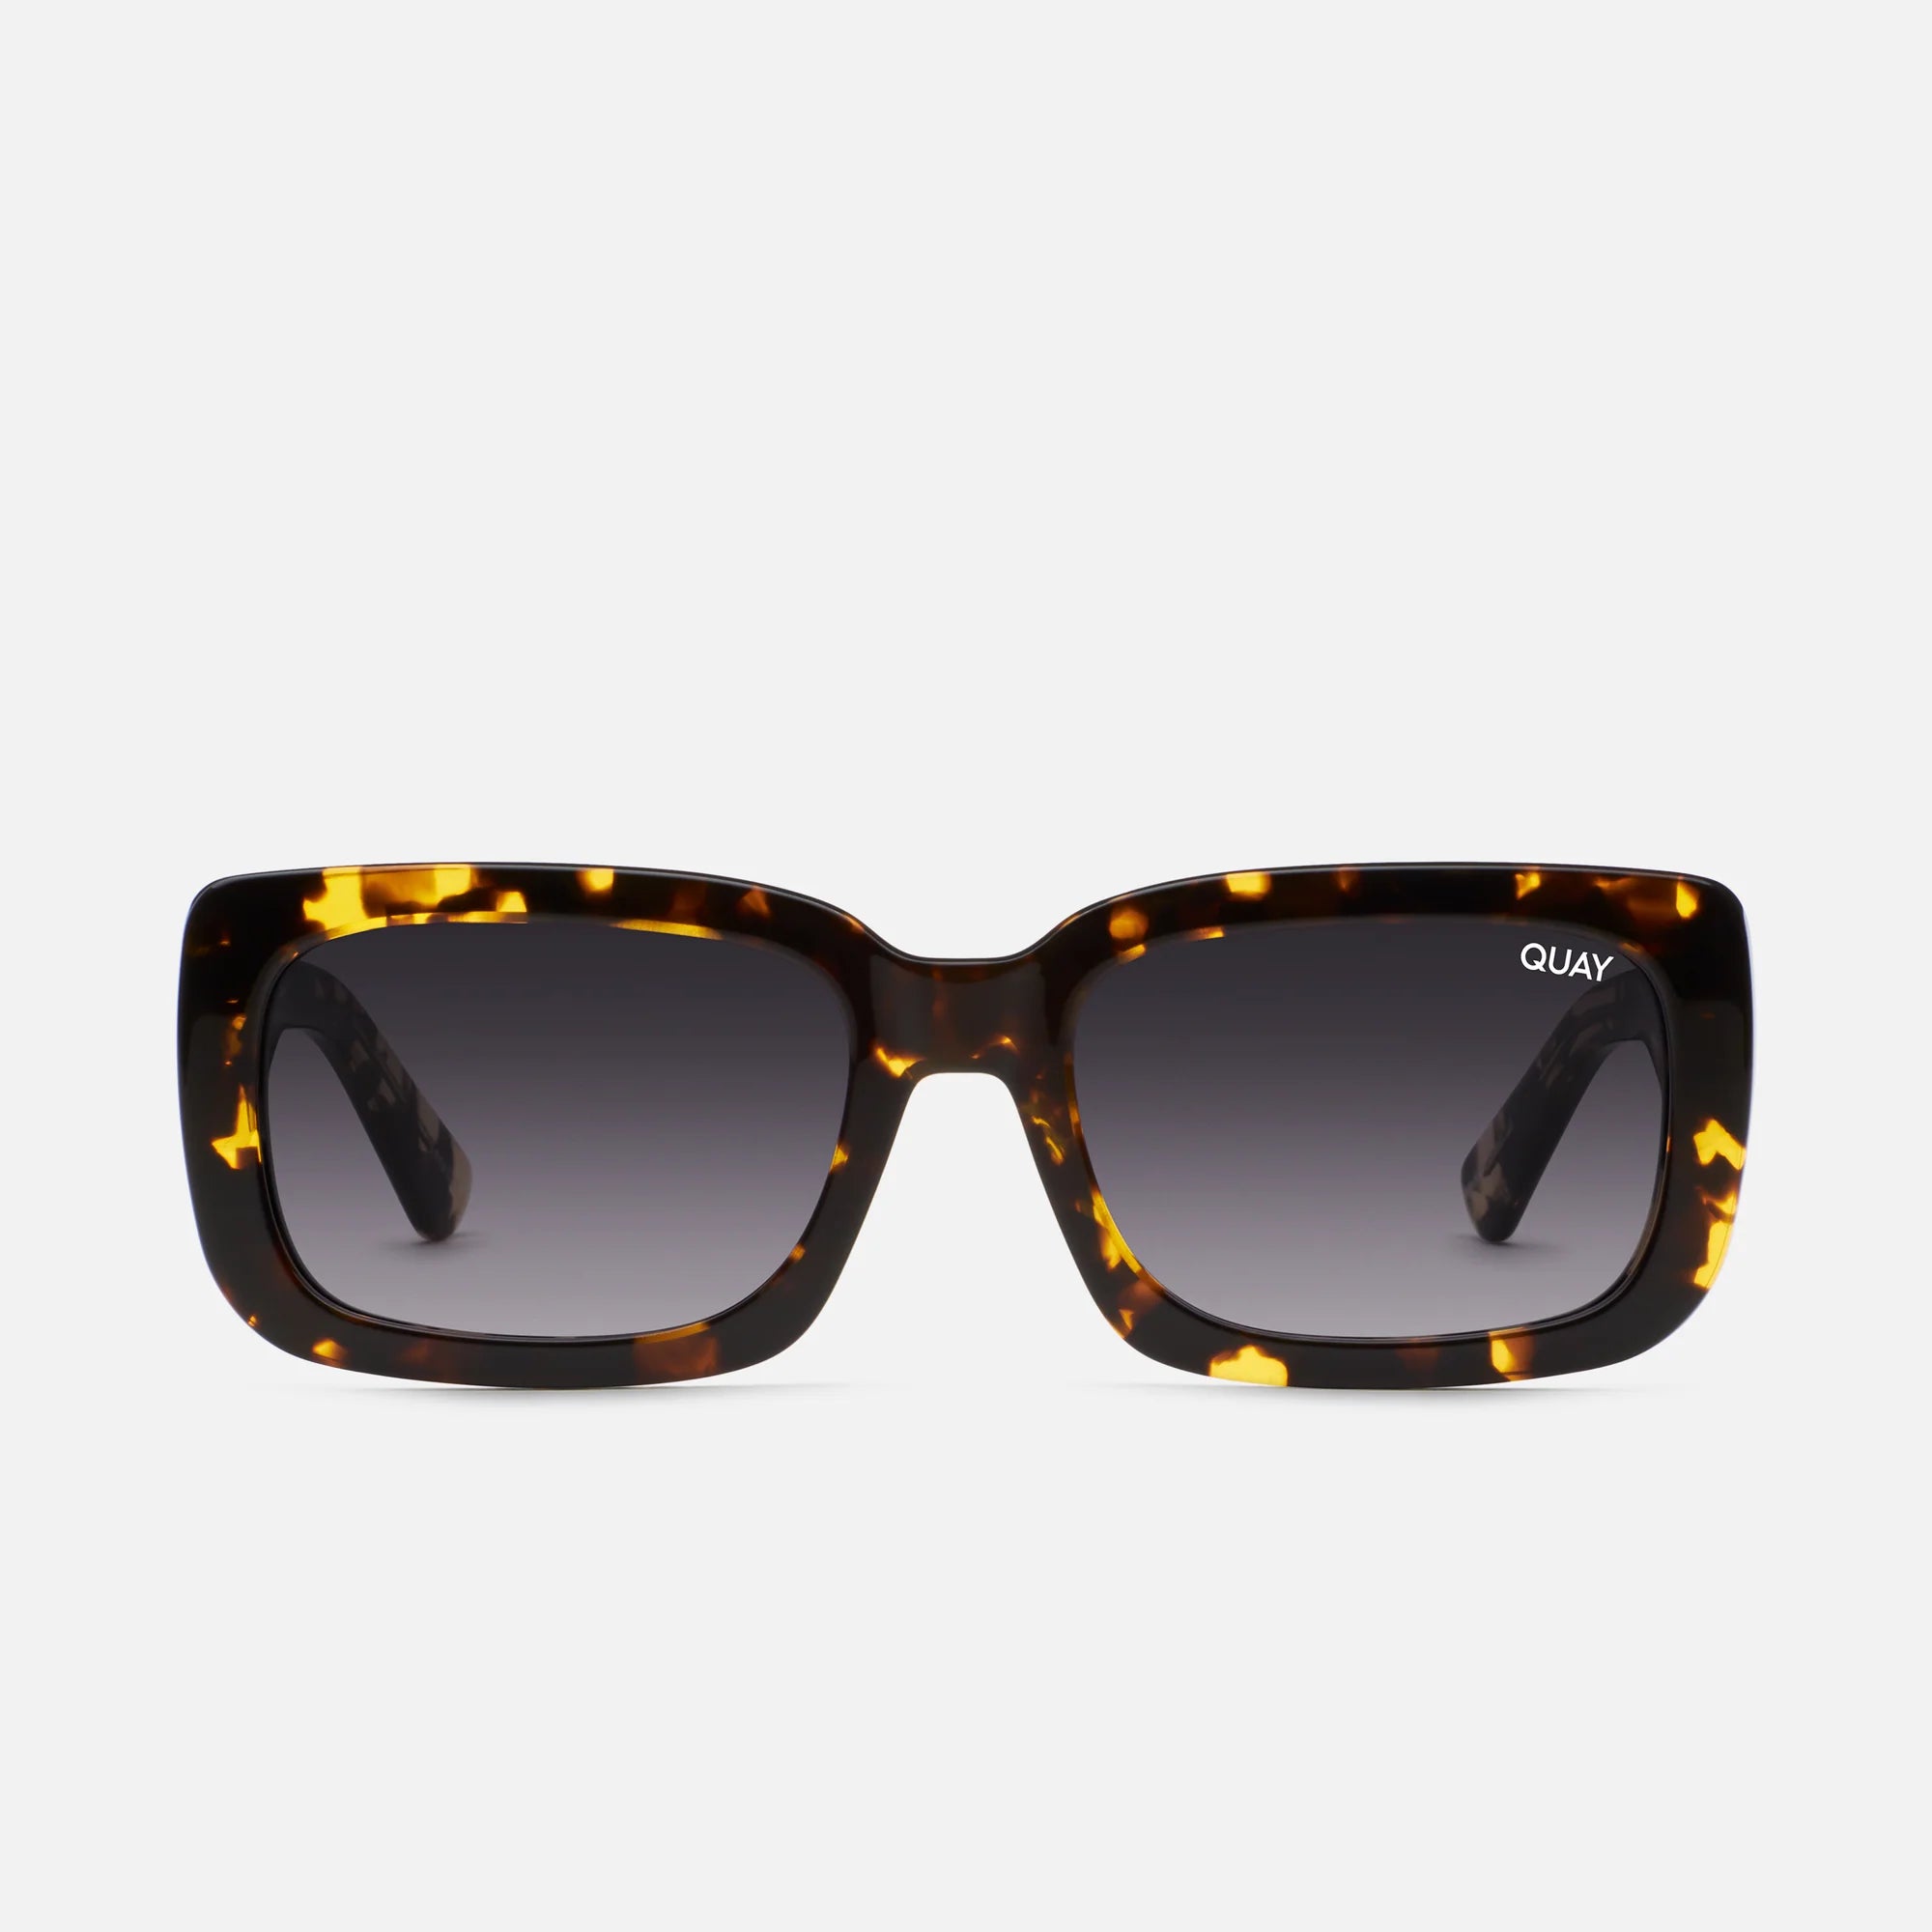 QUAY Sunglasses - Yada Yada - TORTOISE